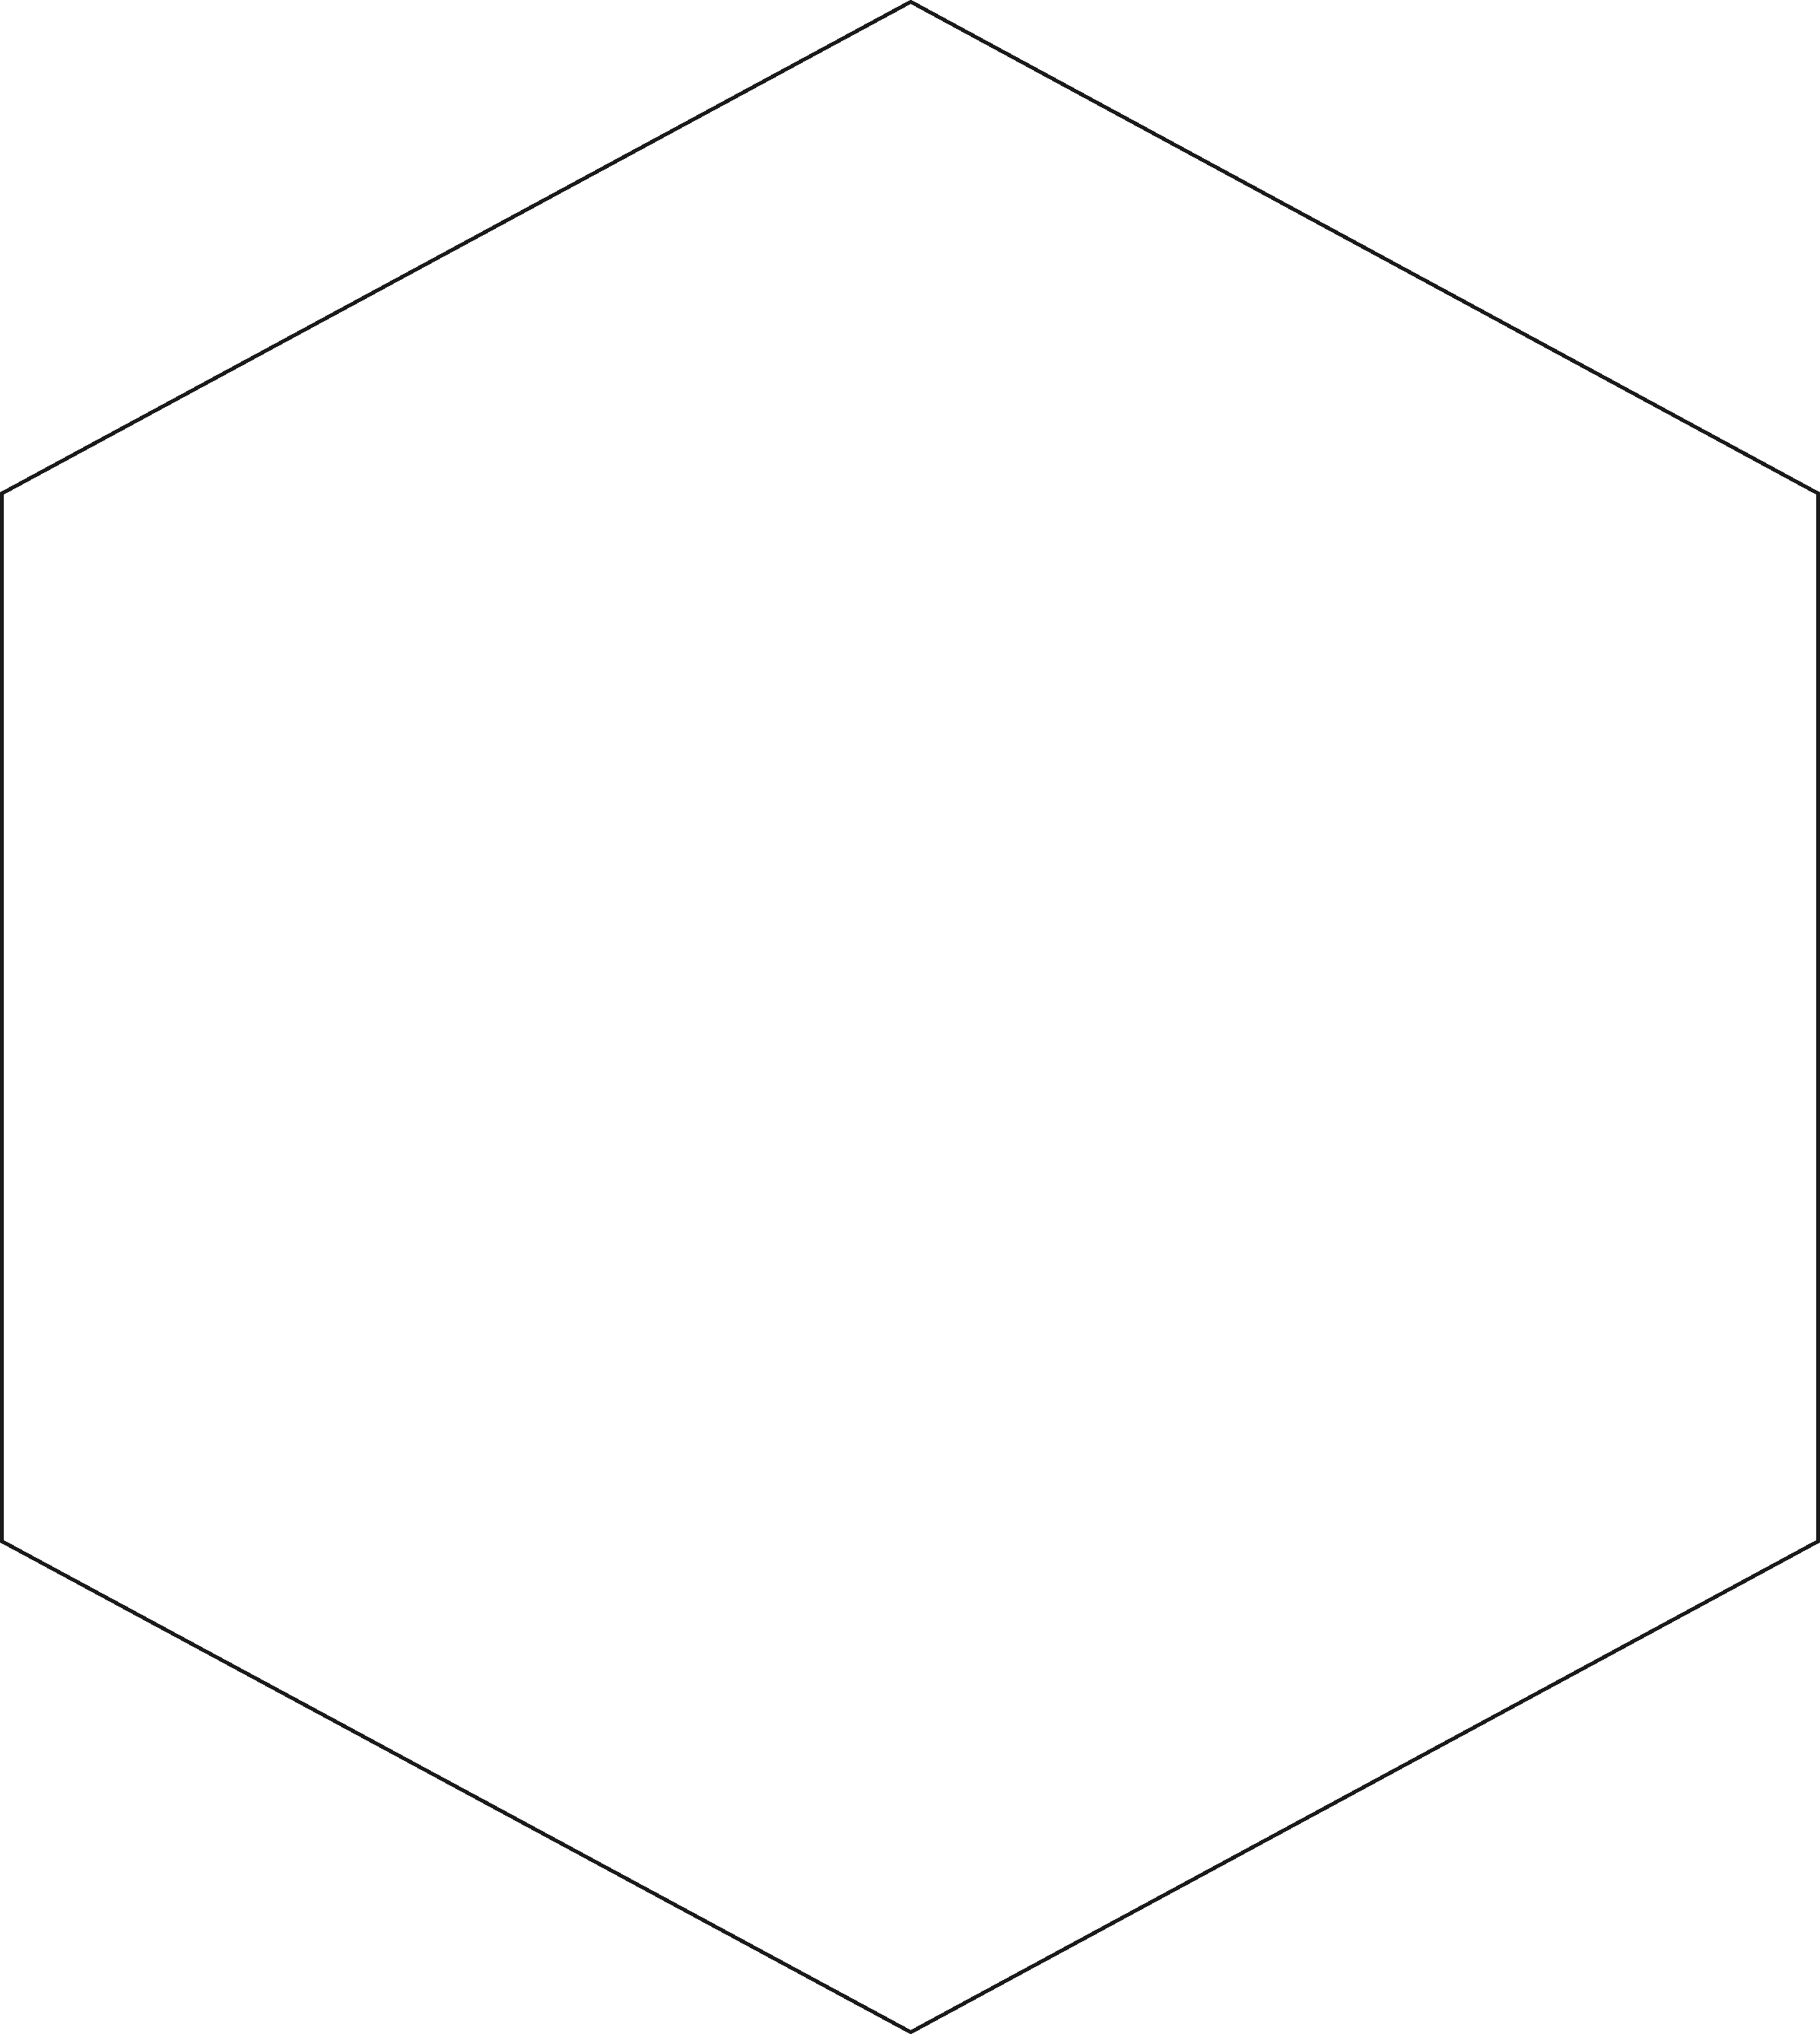 Hexagon HD wallpapers, Desktop wallpaper - most viewed